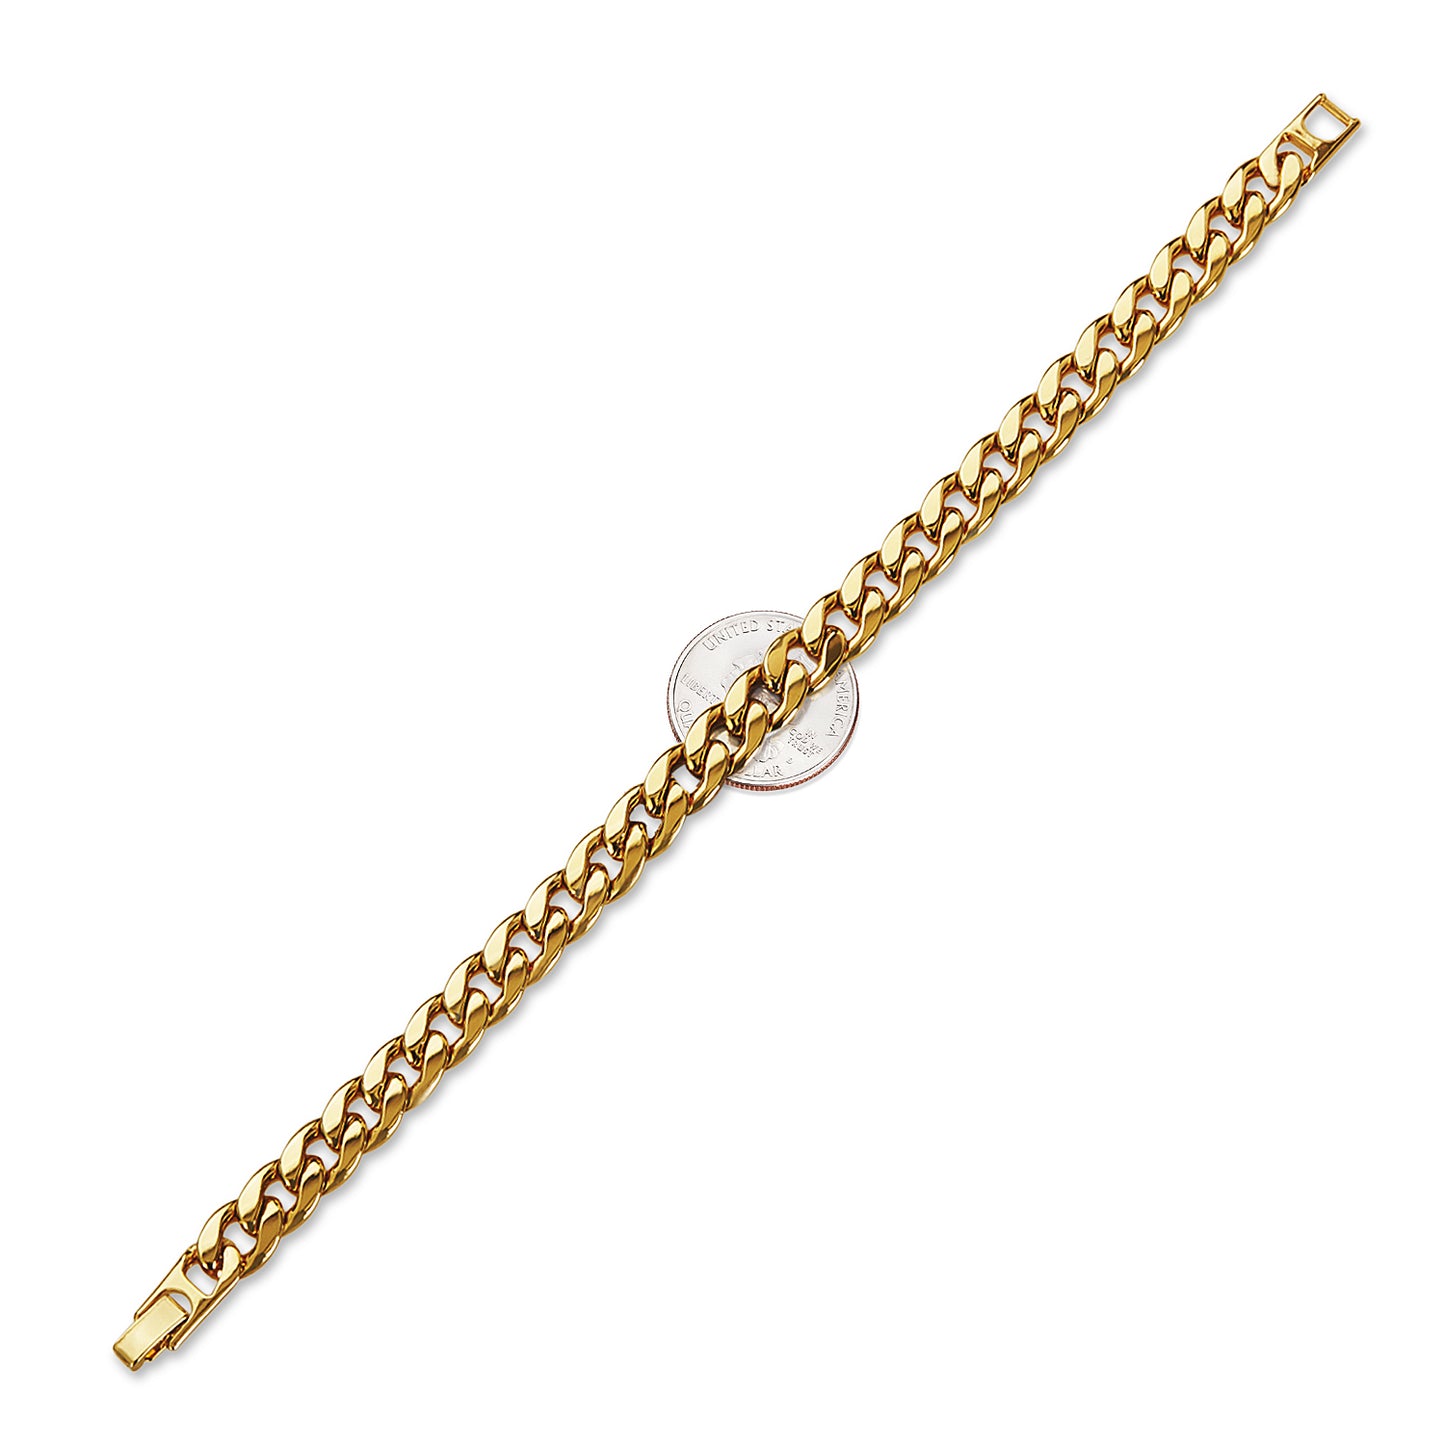 Men's 9mm 25 mills 14k Gold Plated Cuban Link Chain Necklace, 7'8'9'16'18'20'22'24'30'36" (SKU: GL-036C)